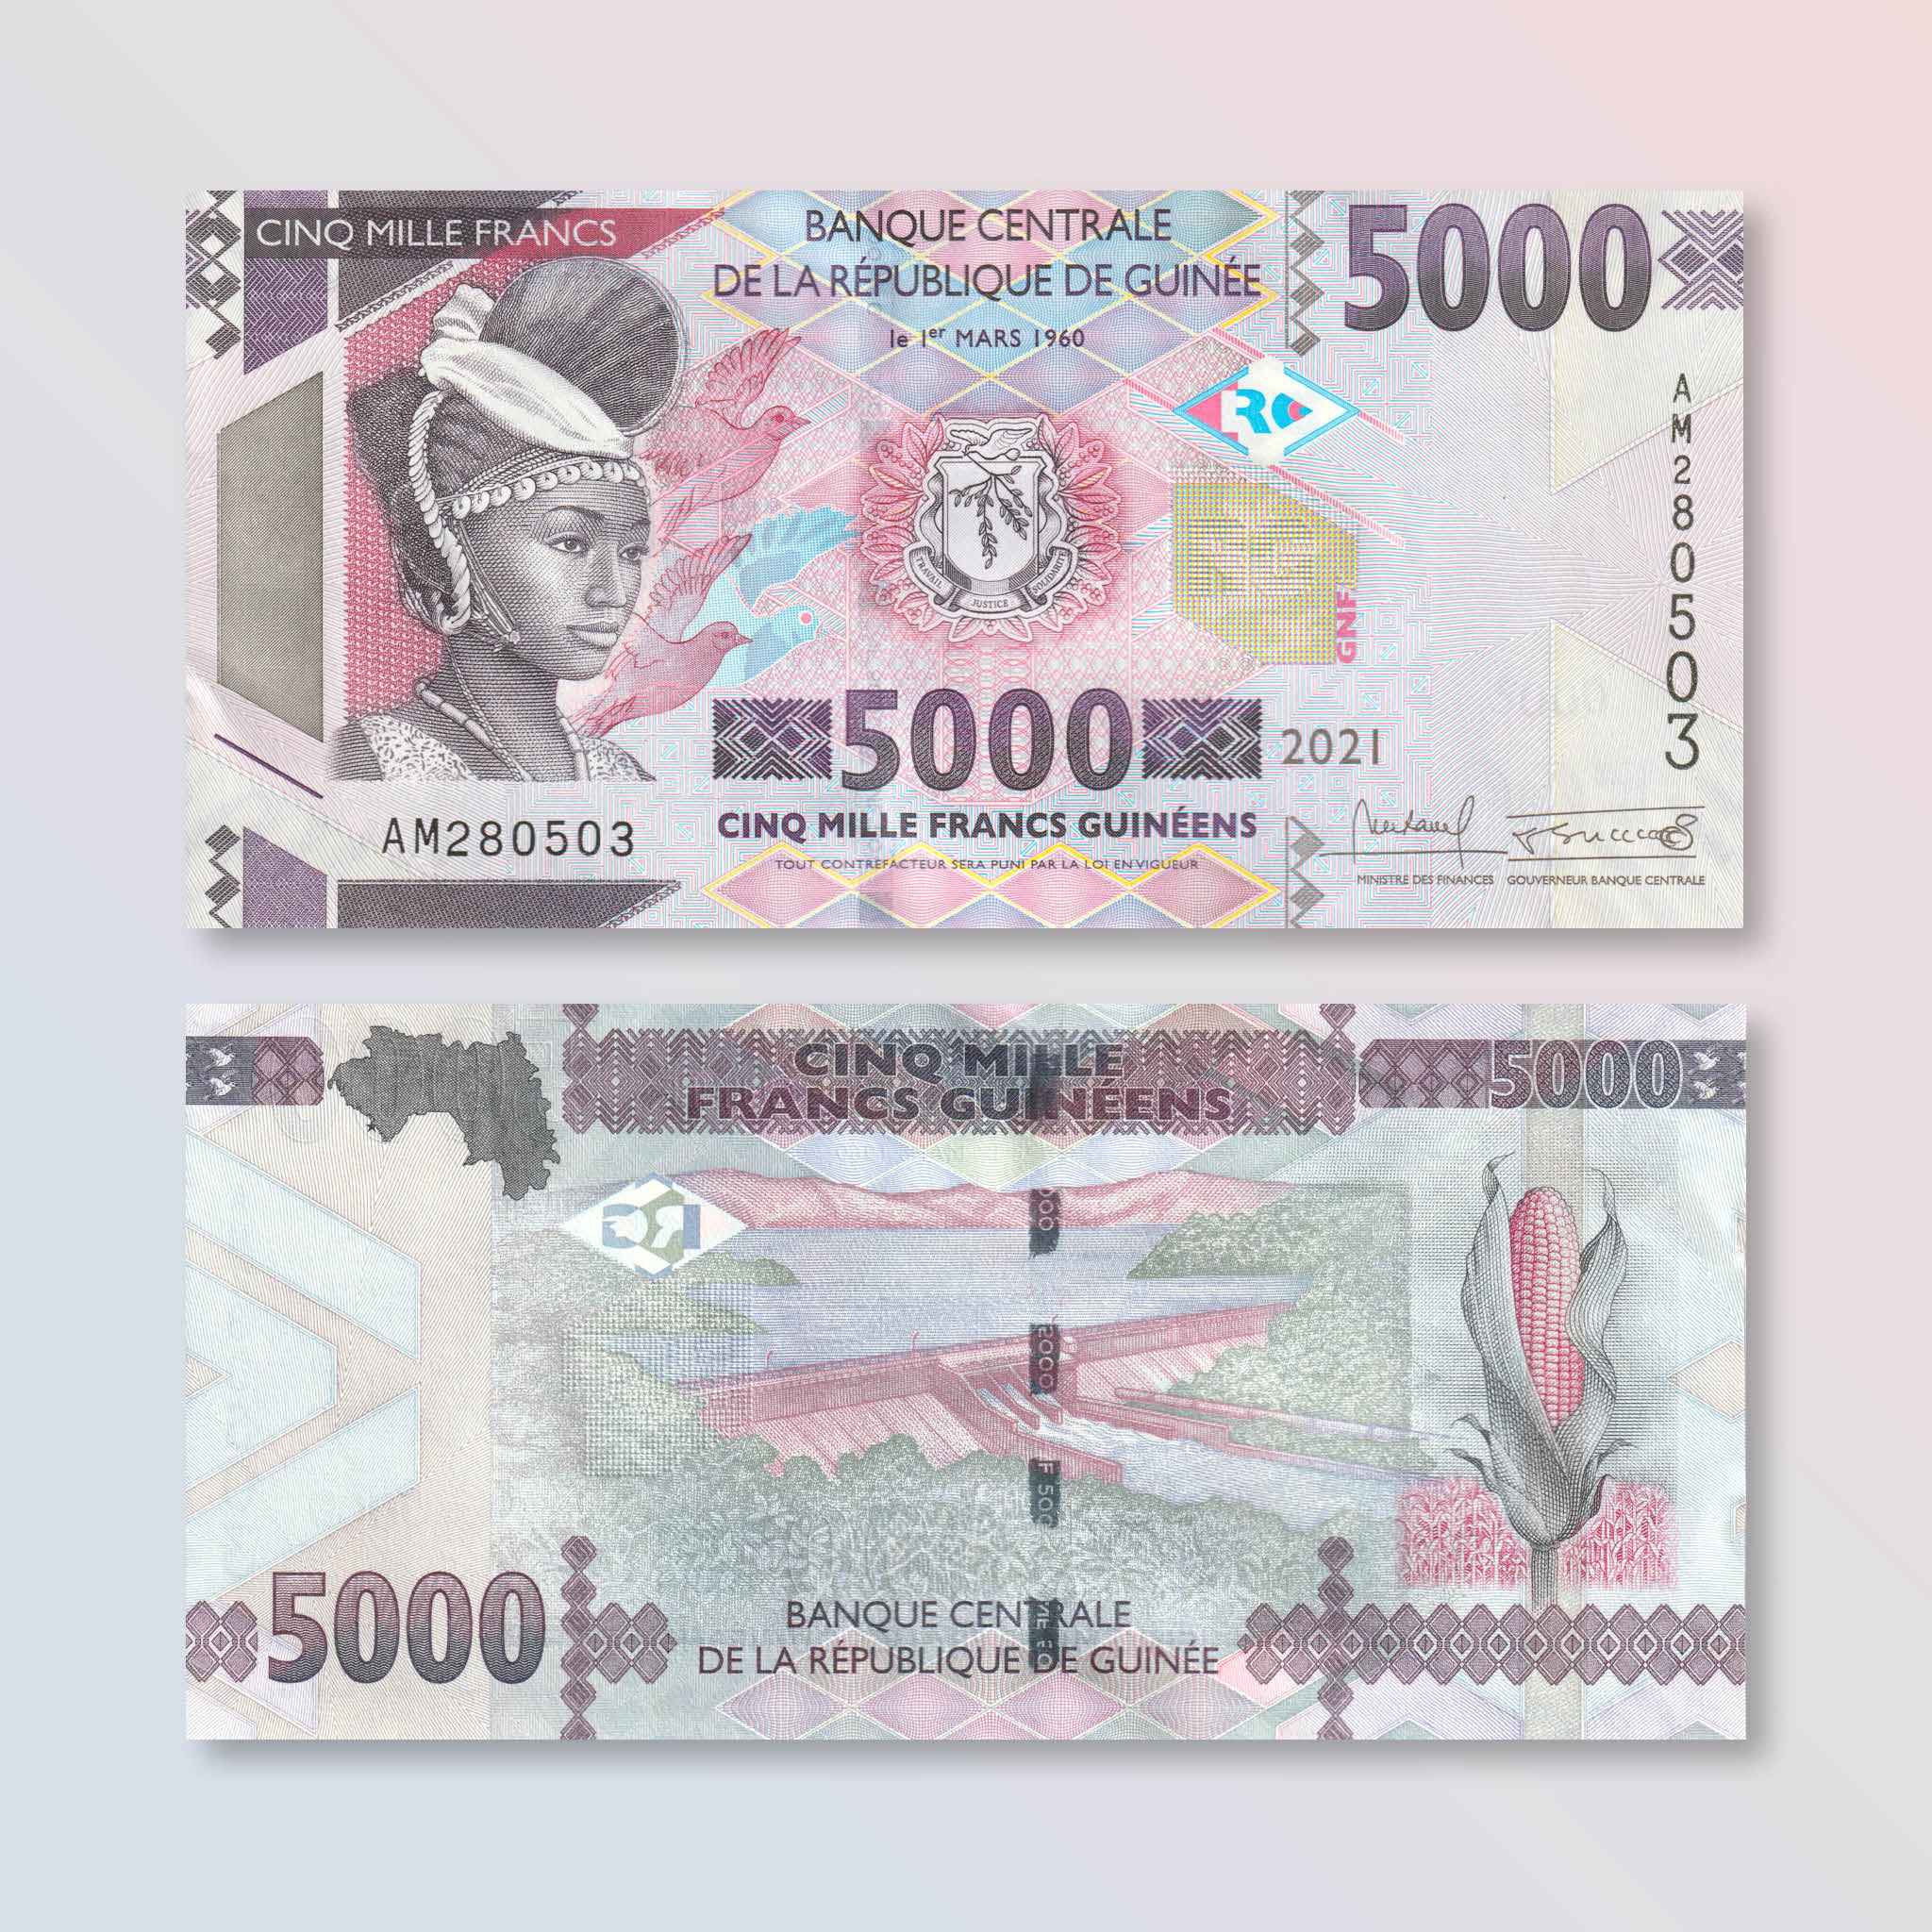 Guinea 5000 Francs, 2021, B340c, P49, UNC - Robert's World Money - World Banknotes